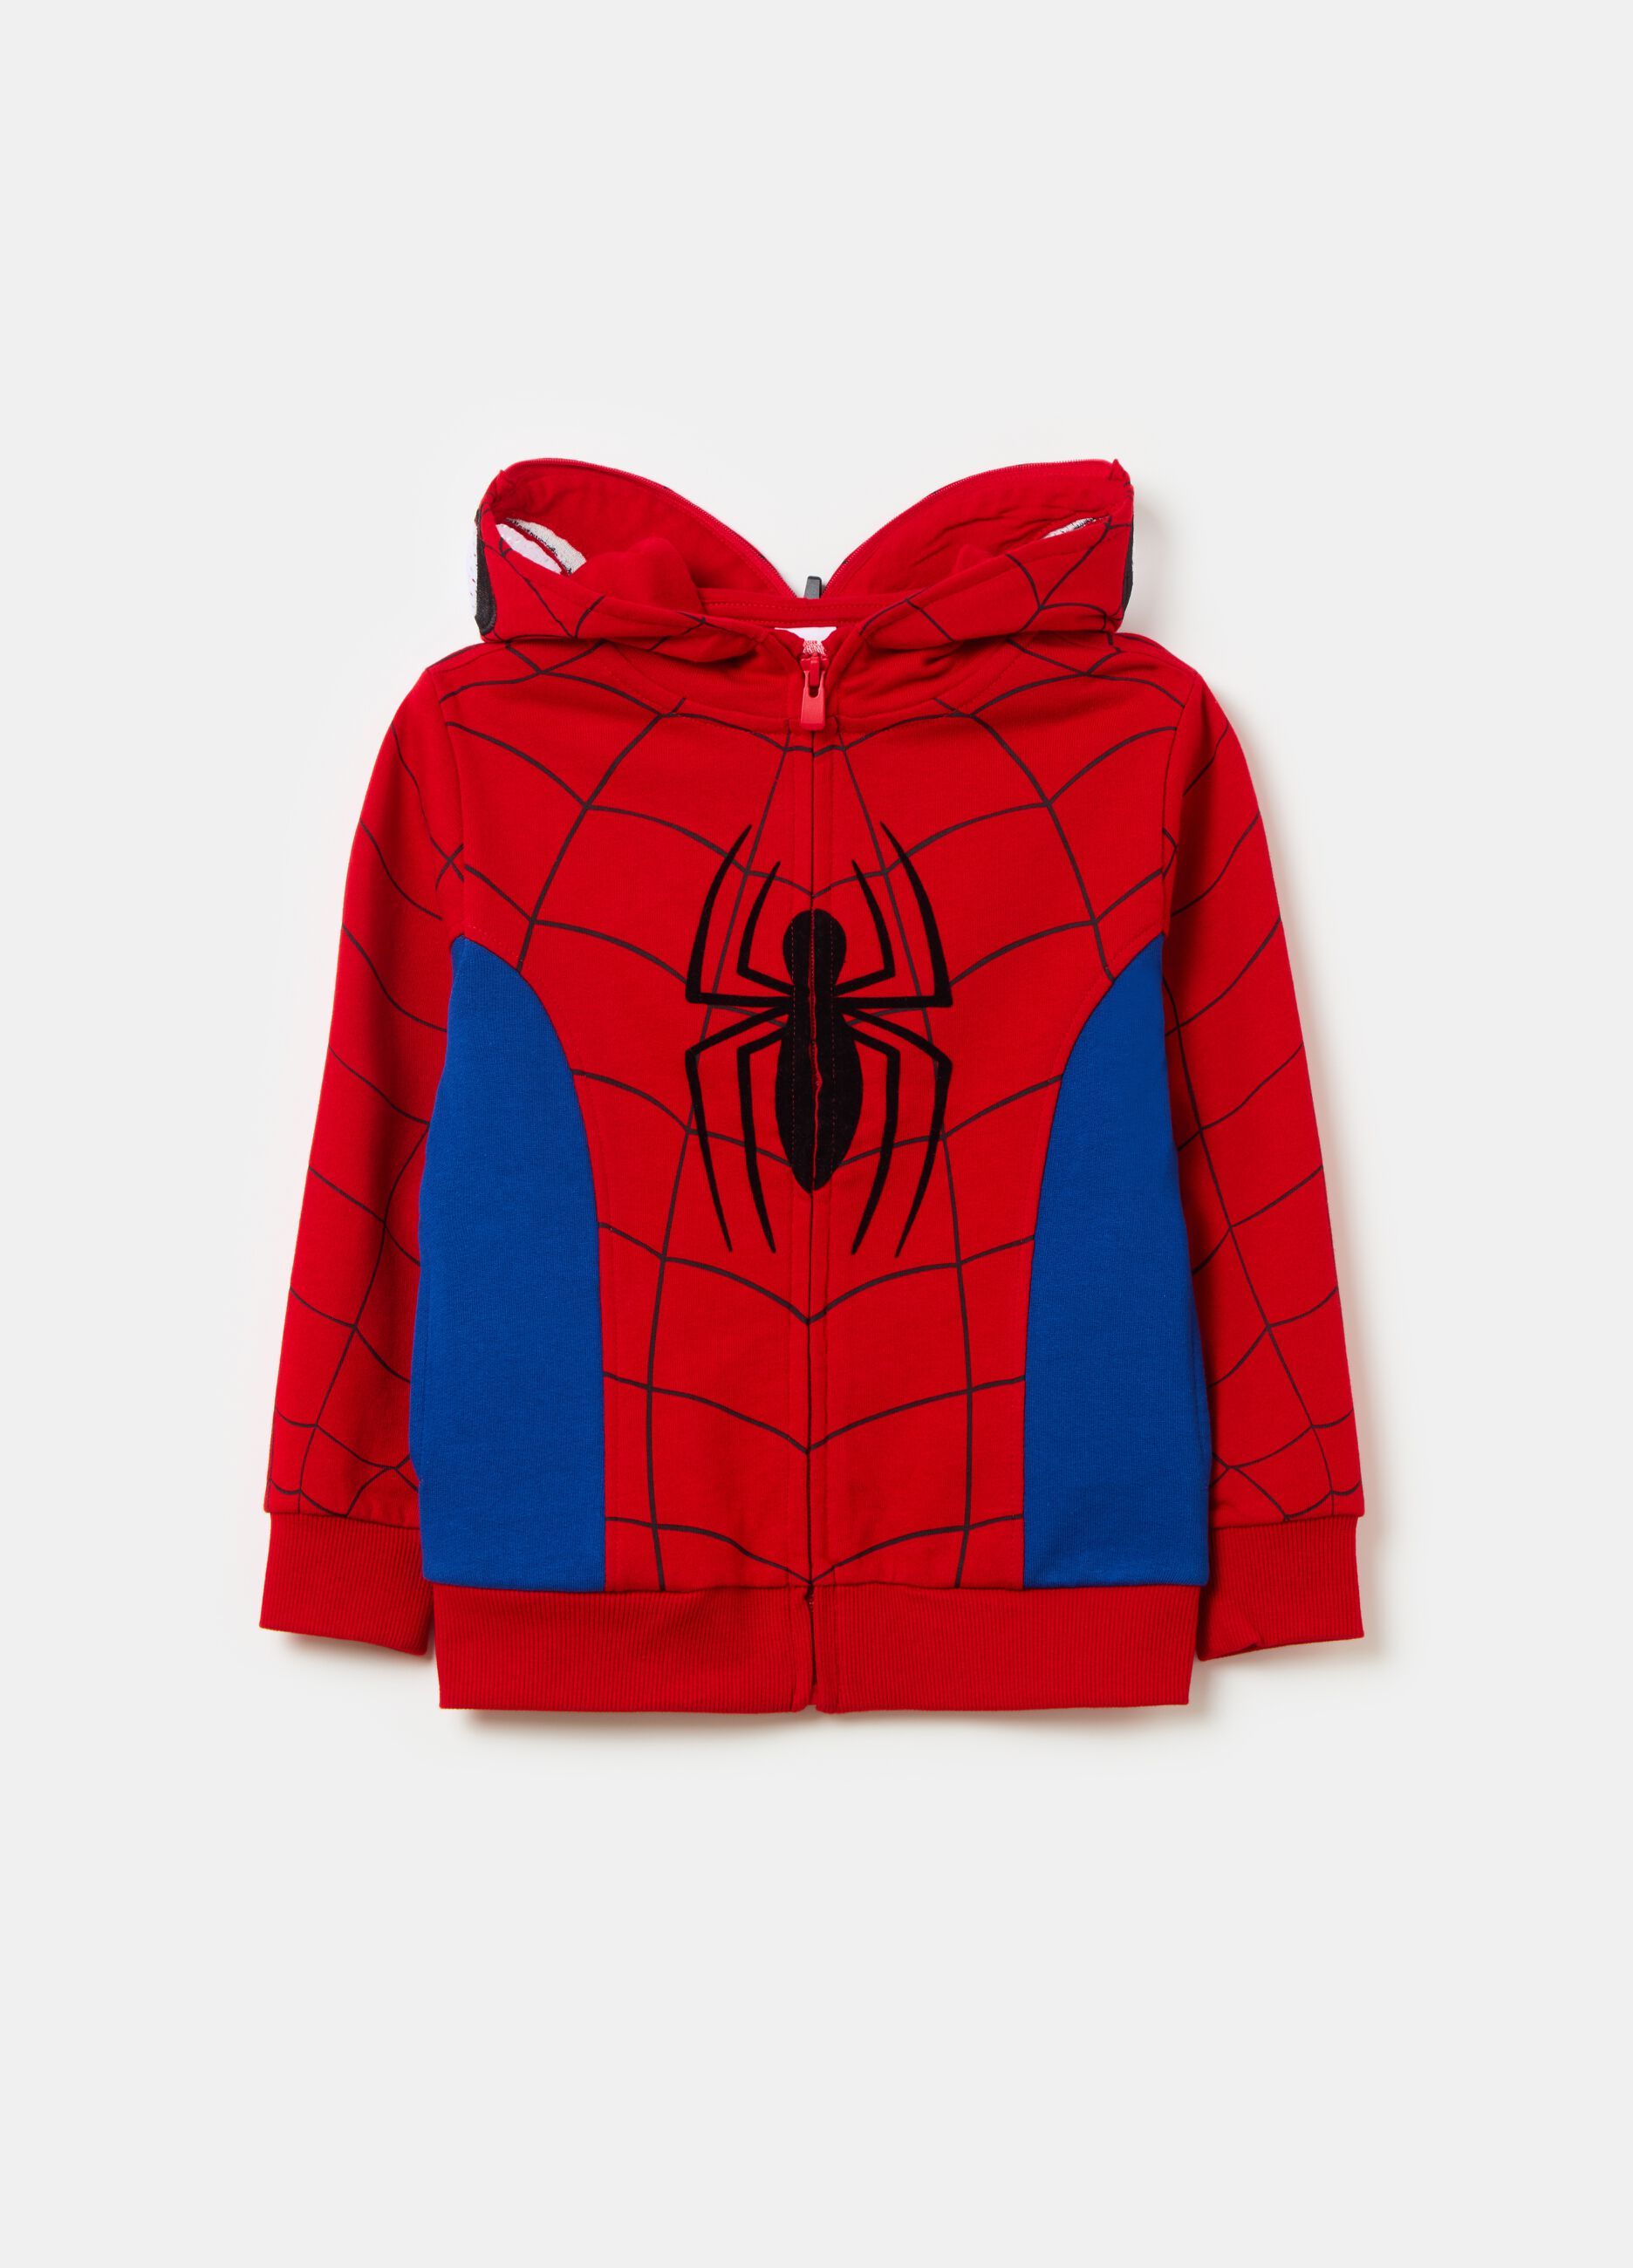 Full-zip sweatshirt with hood and Spider-Man print